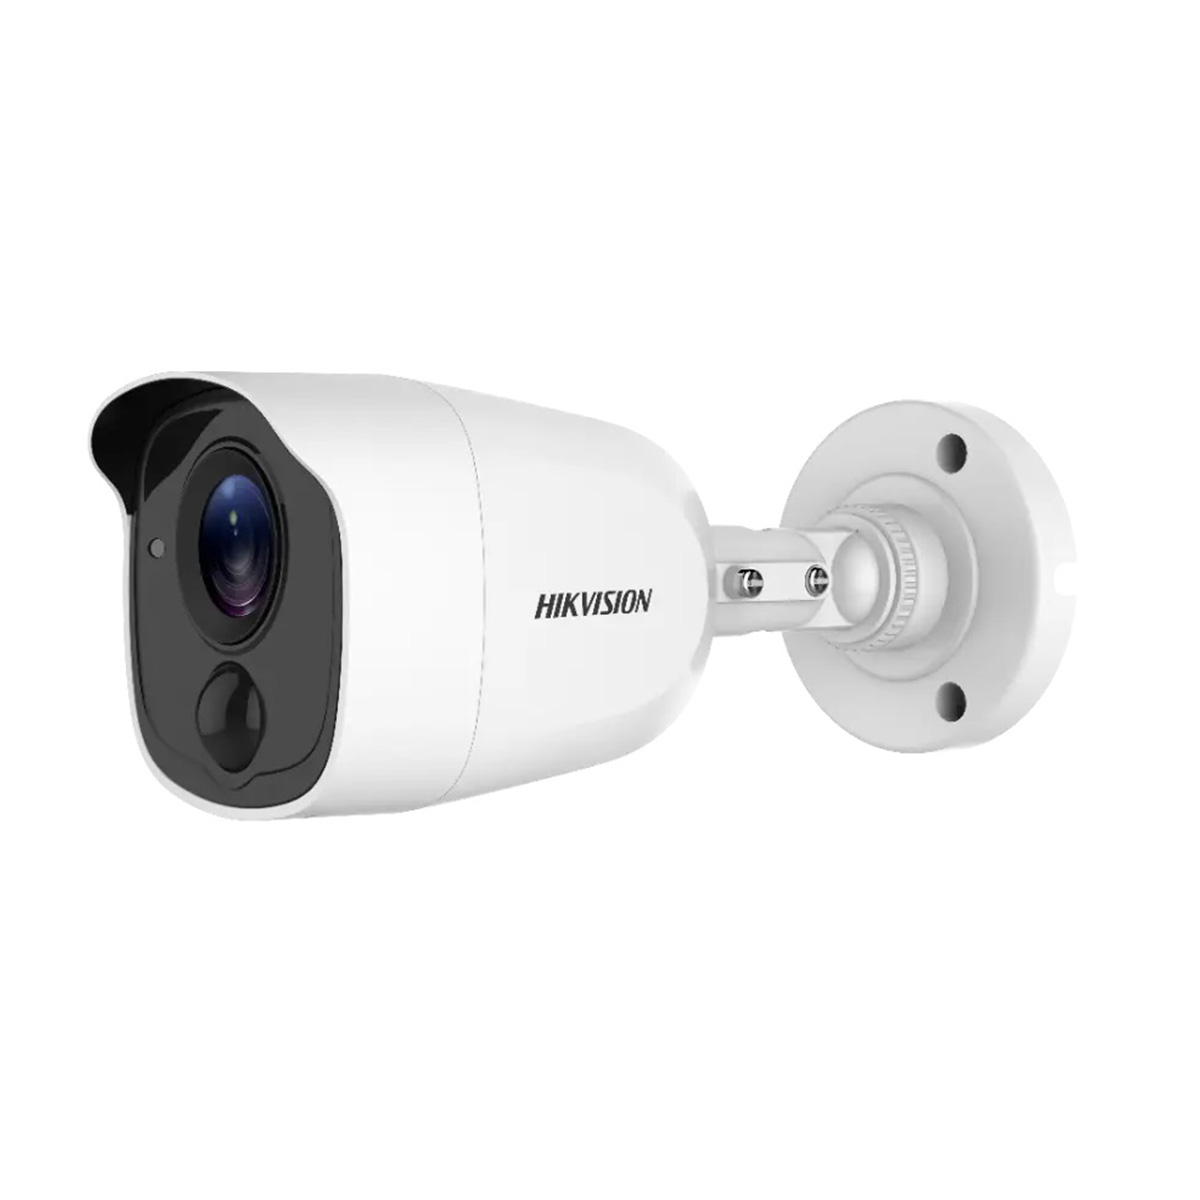 Hikvision DS-2CE11D0T-PIRL – 2MP Bullet Camera